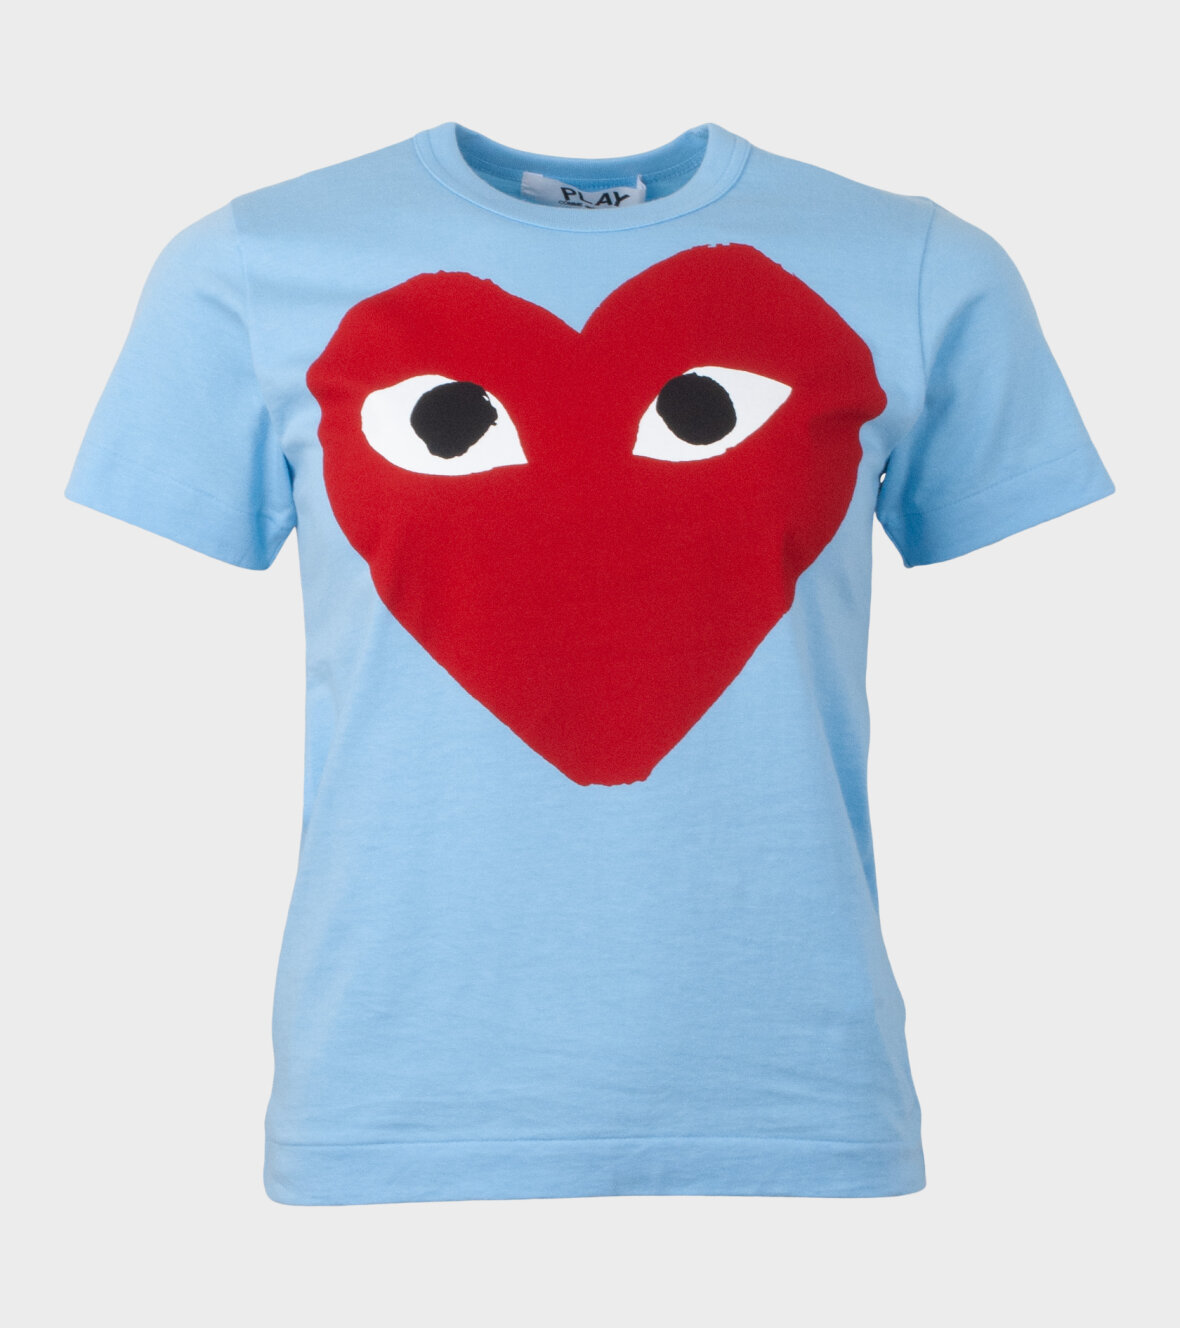 dr. Adams - Comme des Garcons W Red Big Heart T-shirt